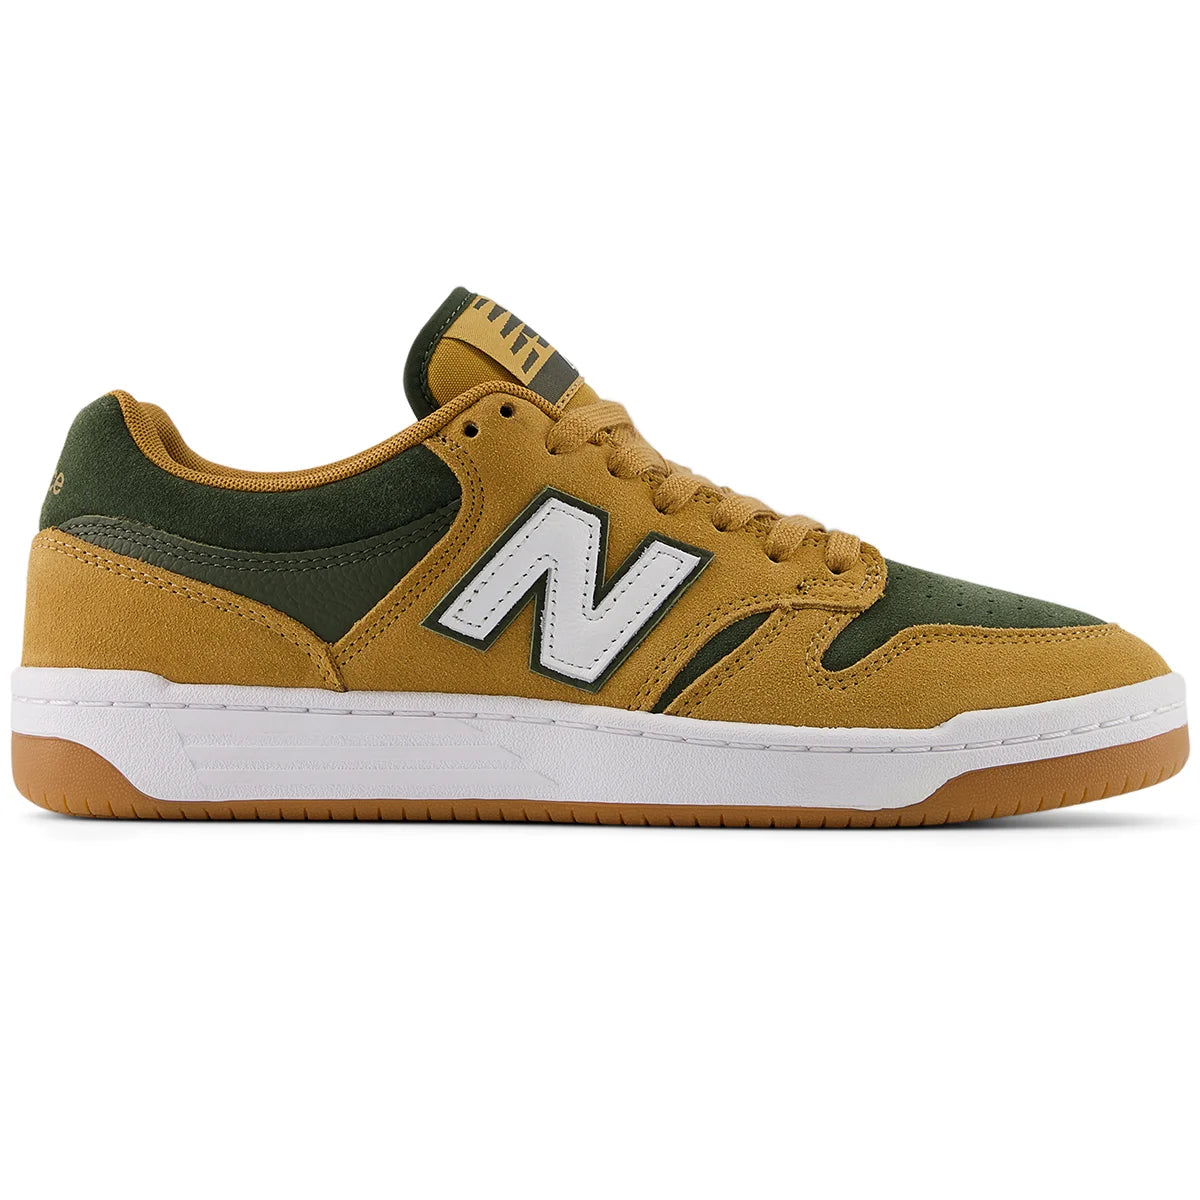 New Balance Numeric 480 Tan/Green Shoes